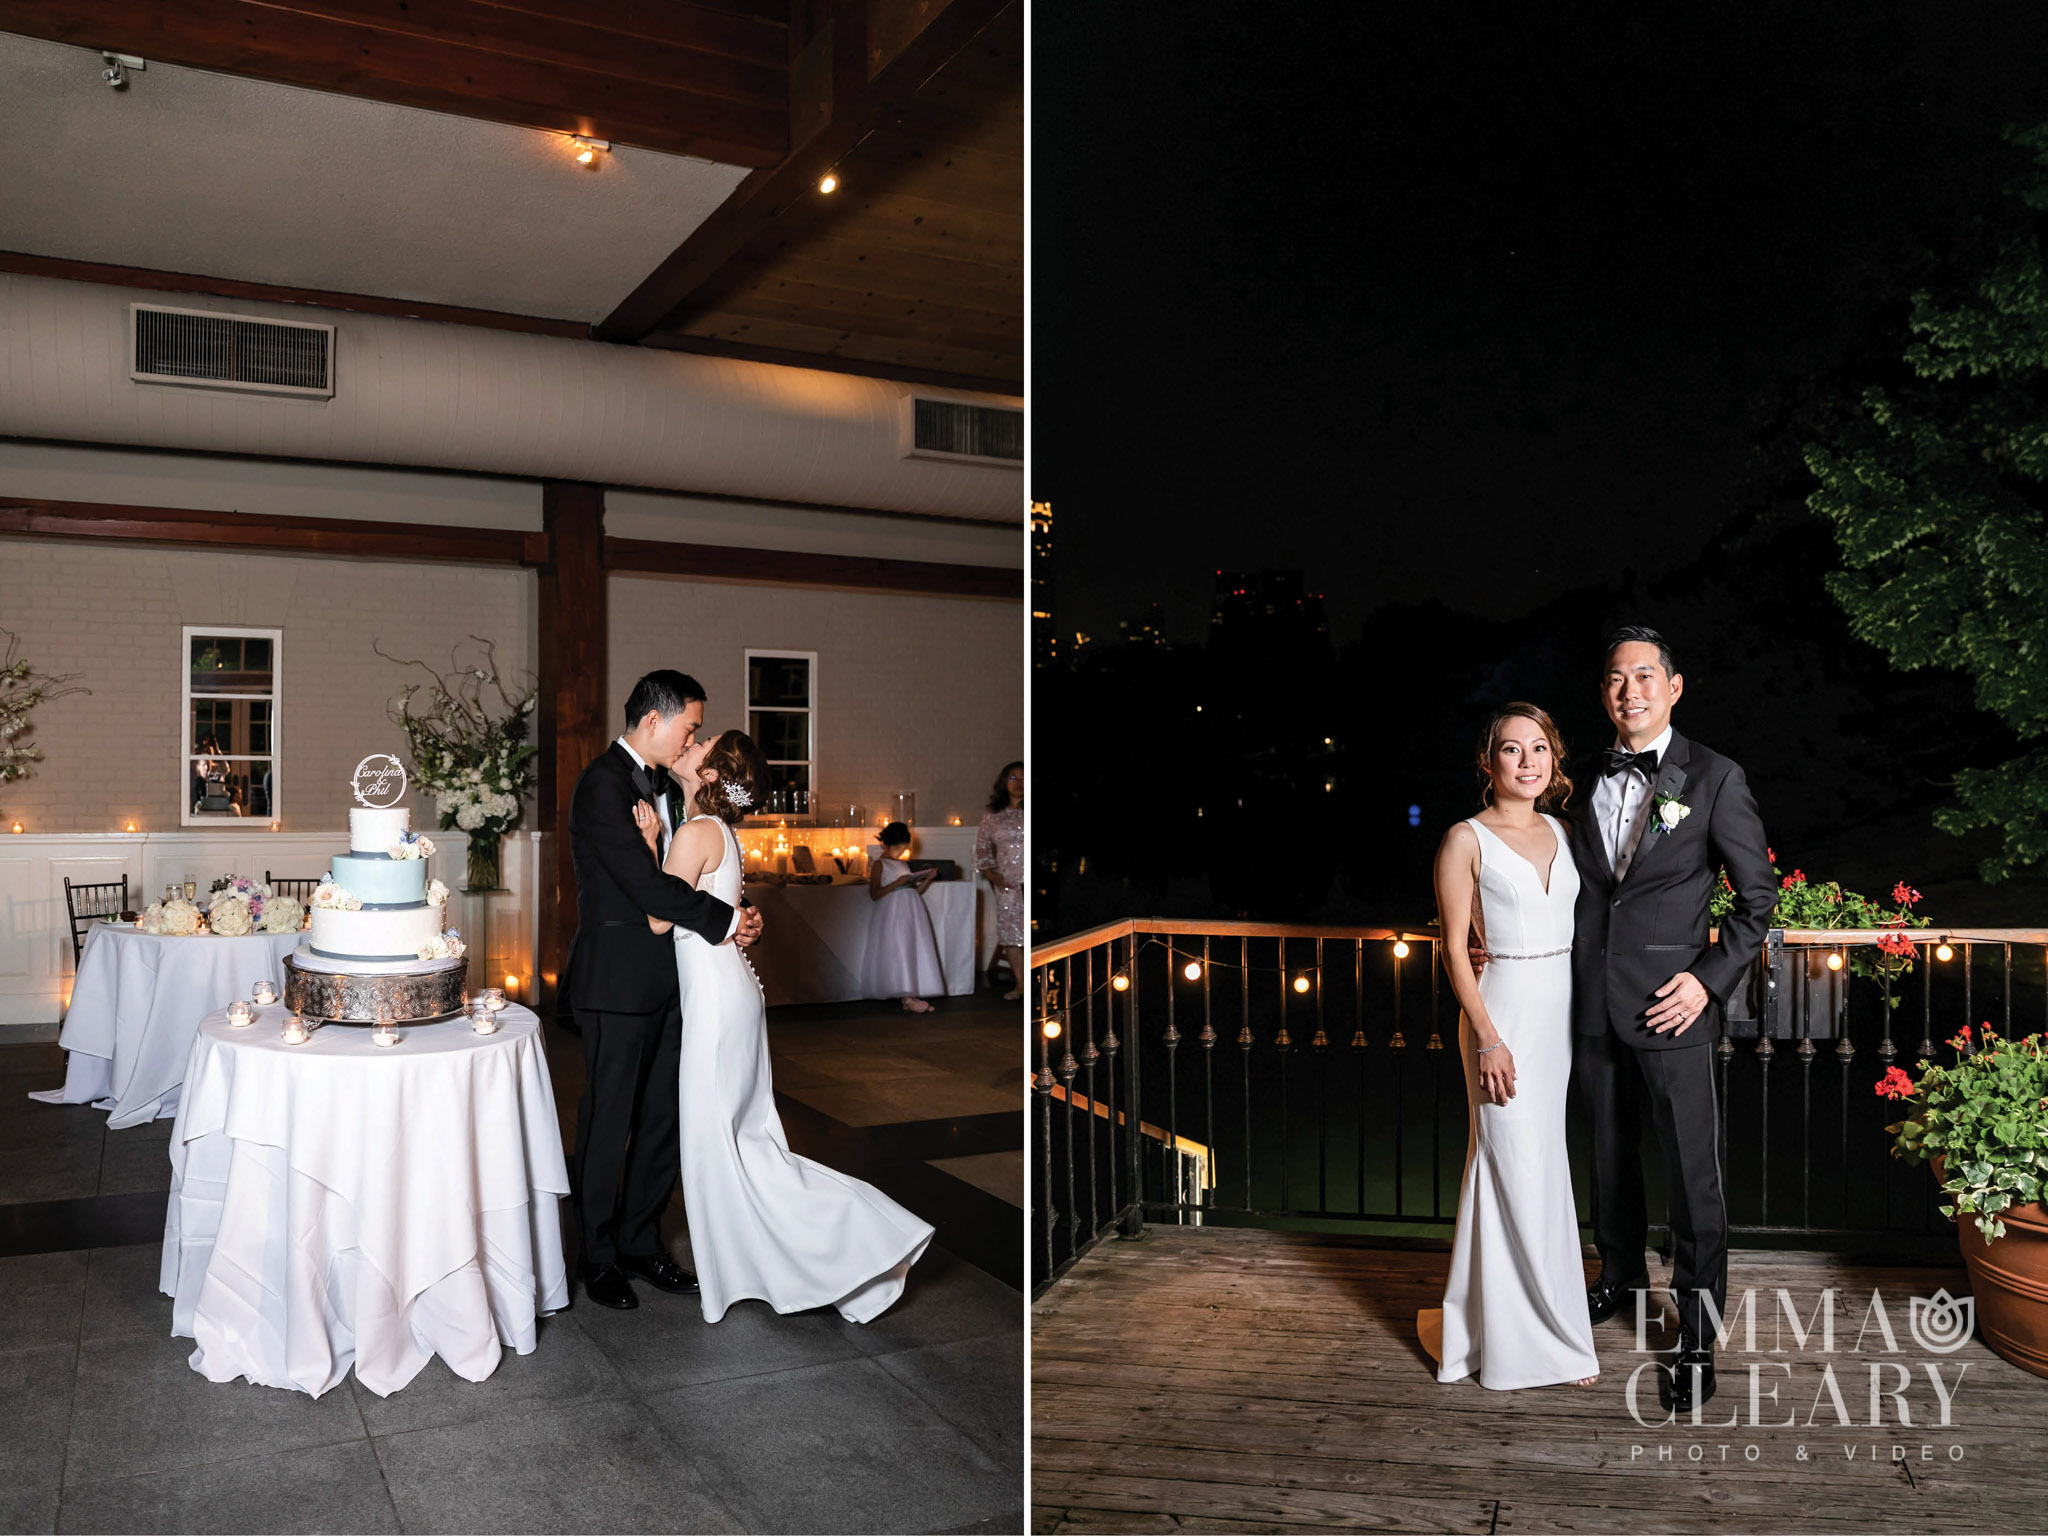 Central Park Boathouse wedding